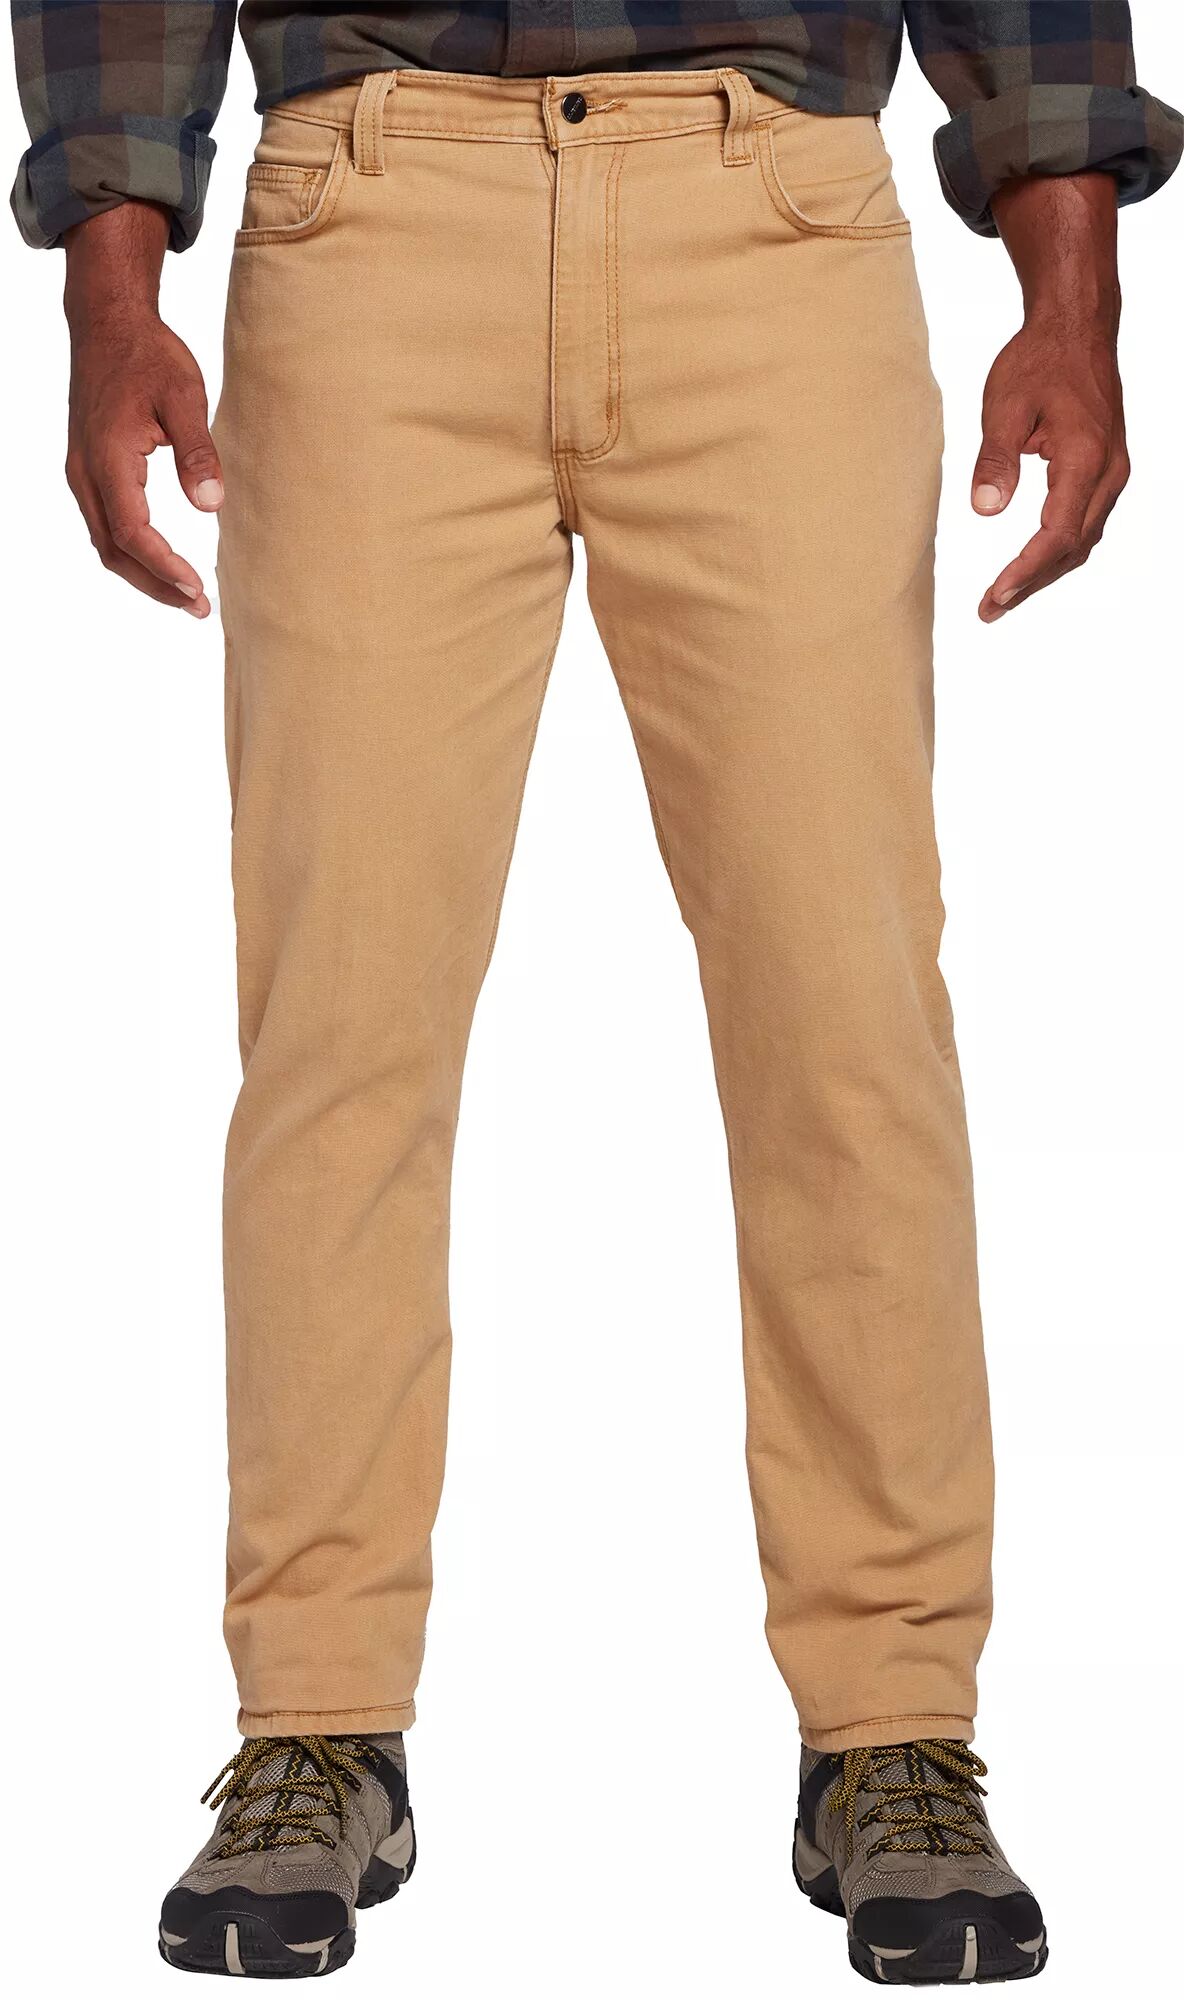 Carhartt Men's Rugged Flex Rigby 5-Pocket Pants, Size 36, Tan